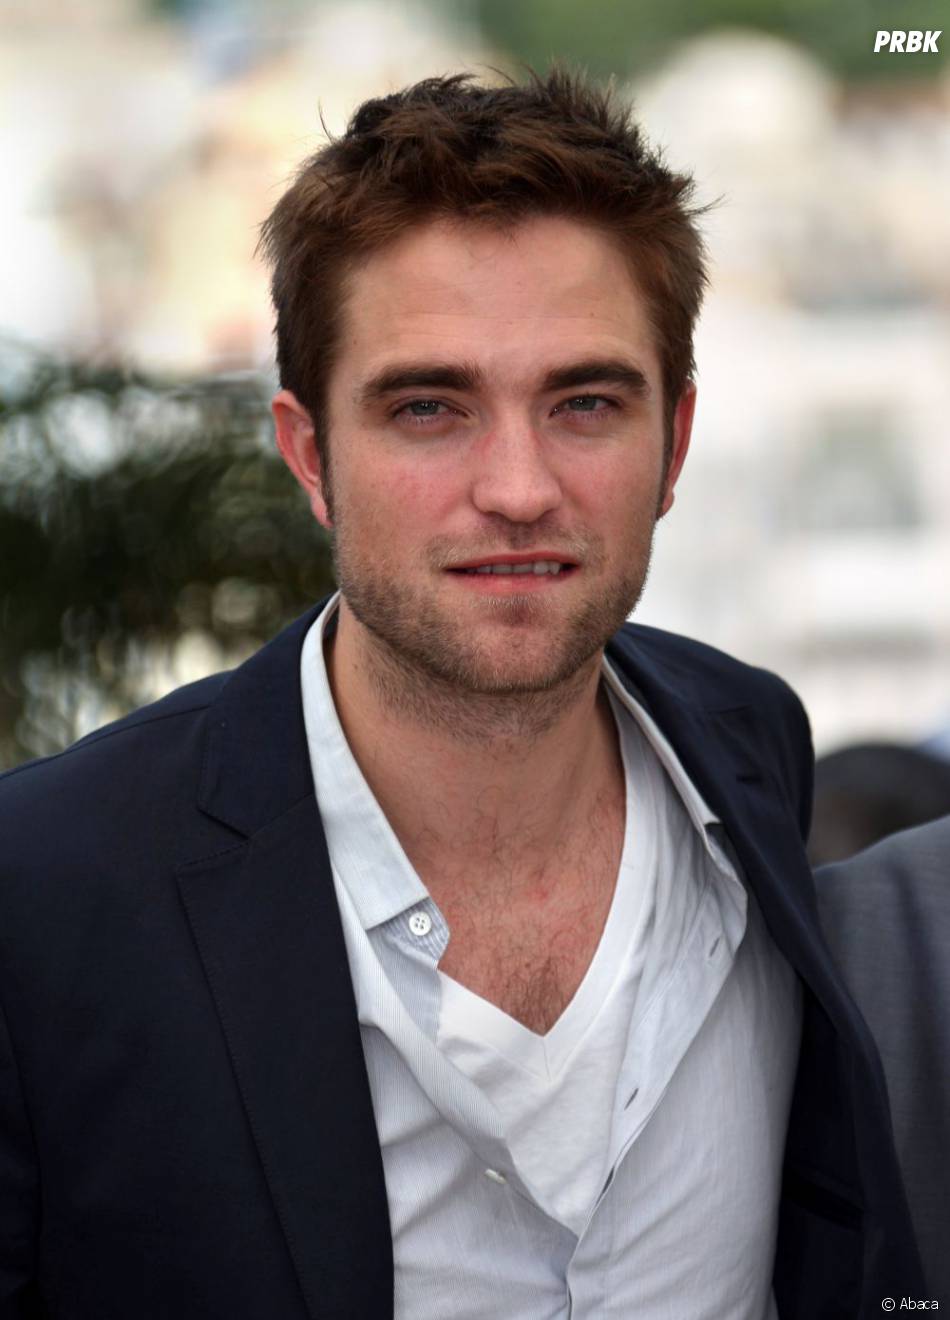 Robert Pattinson aurait pu jouer dans Fifty Shades of Grey